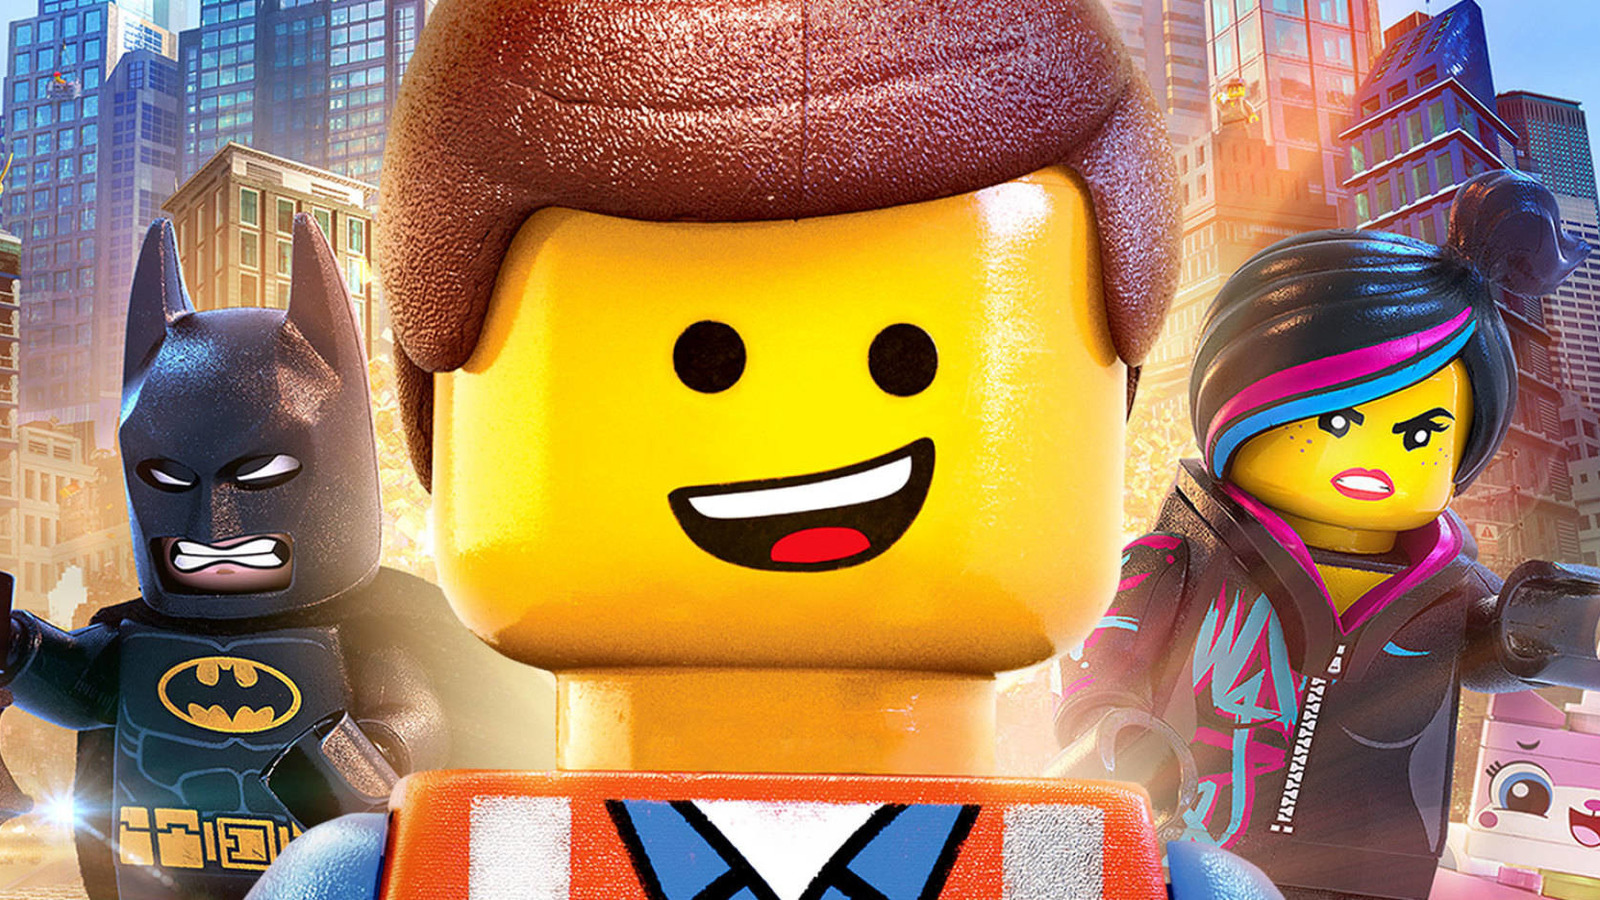 Will Arnett cast as Batman in 'Lego: The Piece of Resistance